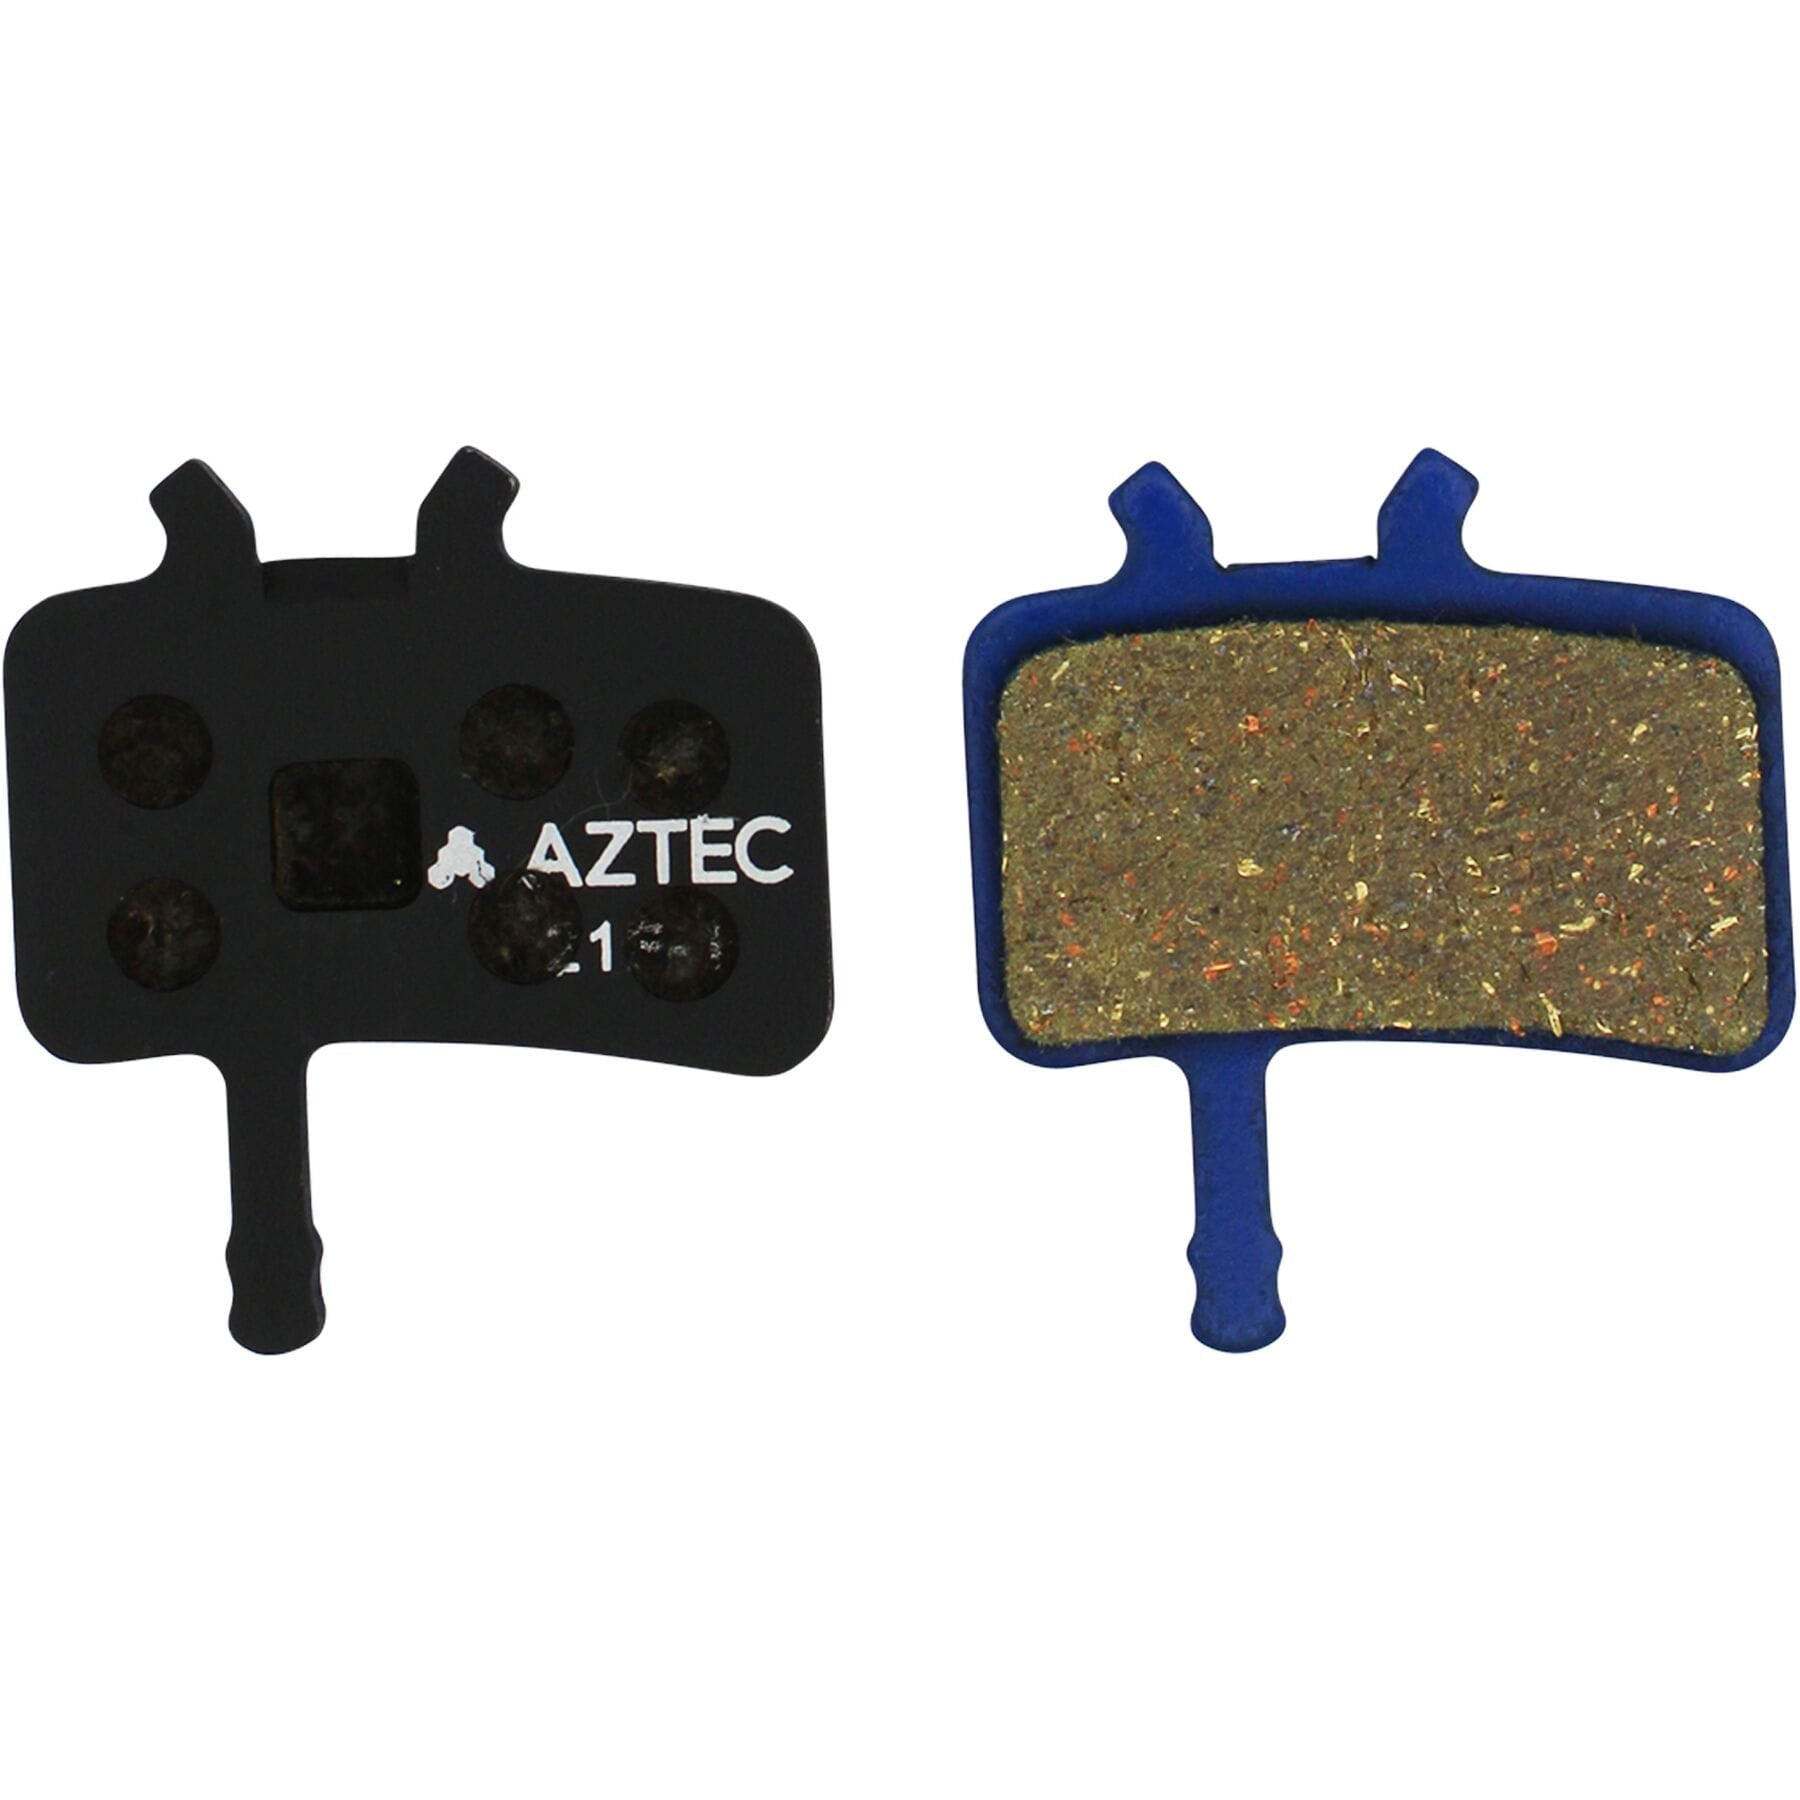 Aztec Avid Juicy/Mechanical Brake Pads